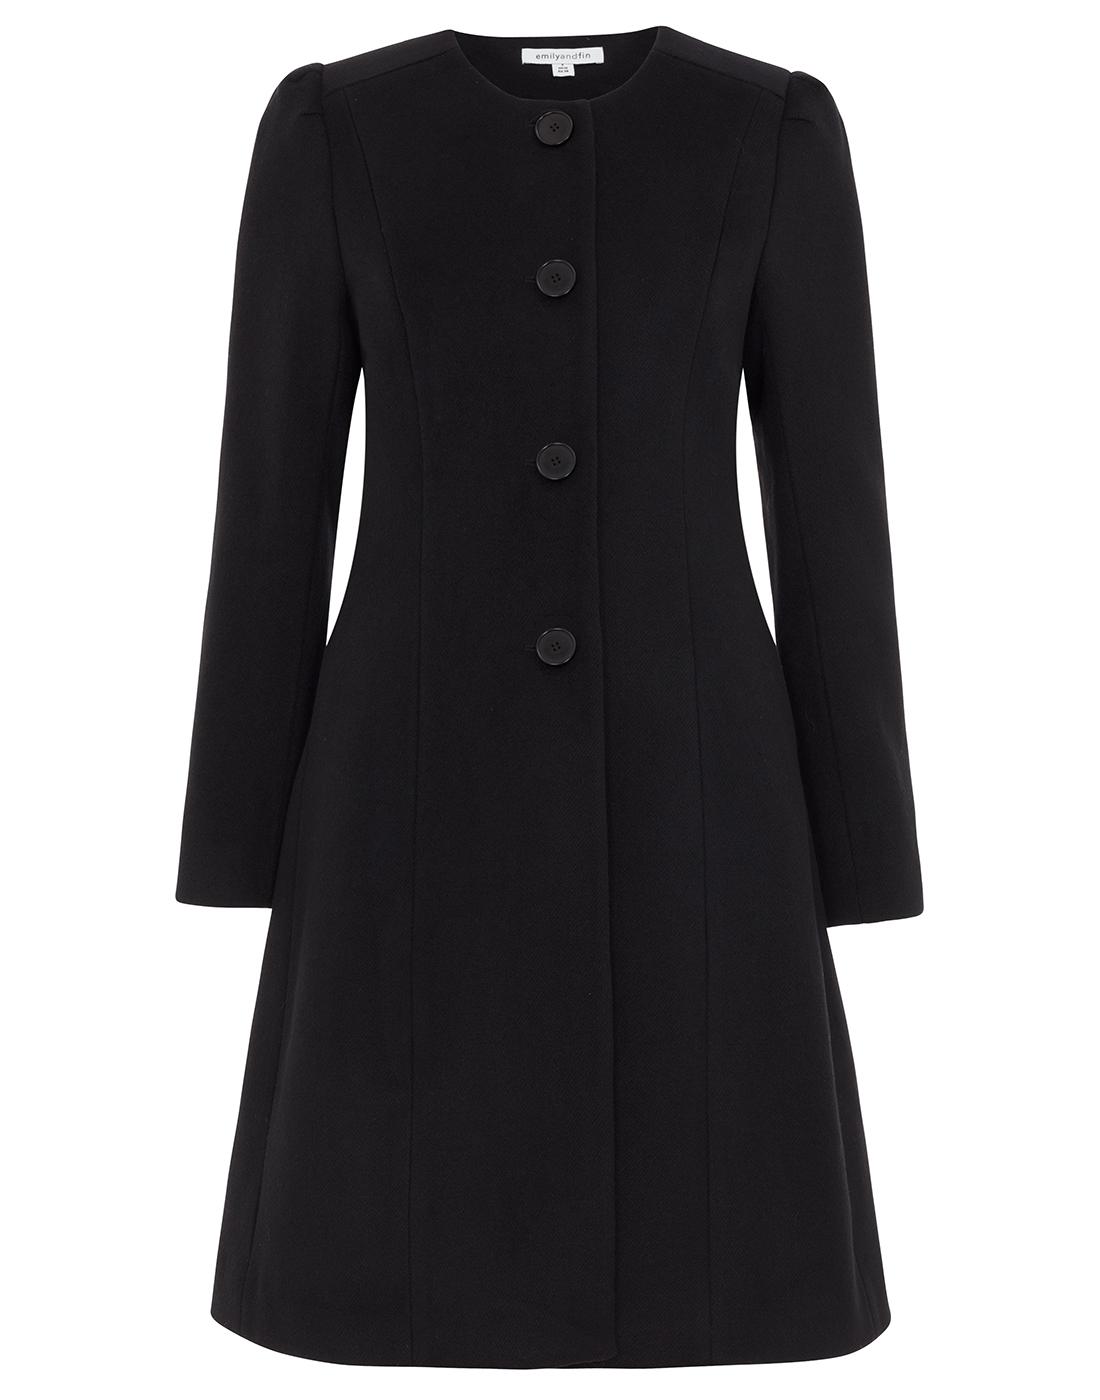 EMILY AND FIN Amelia Retro 60s Collarless Winter Coat in Black